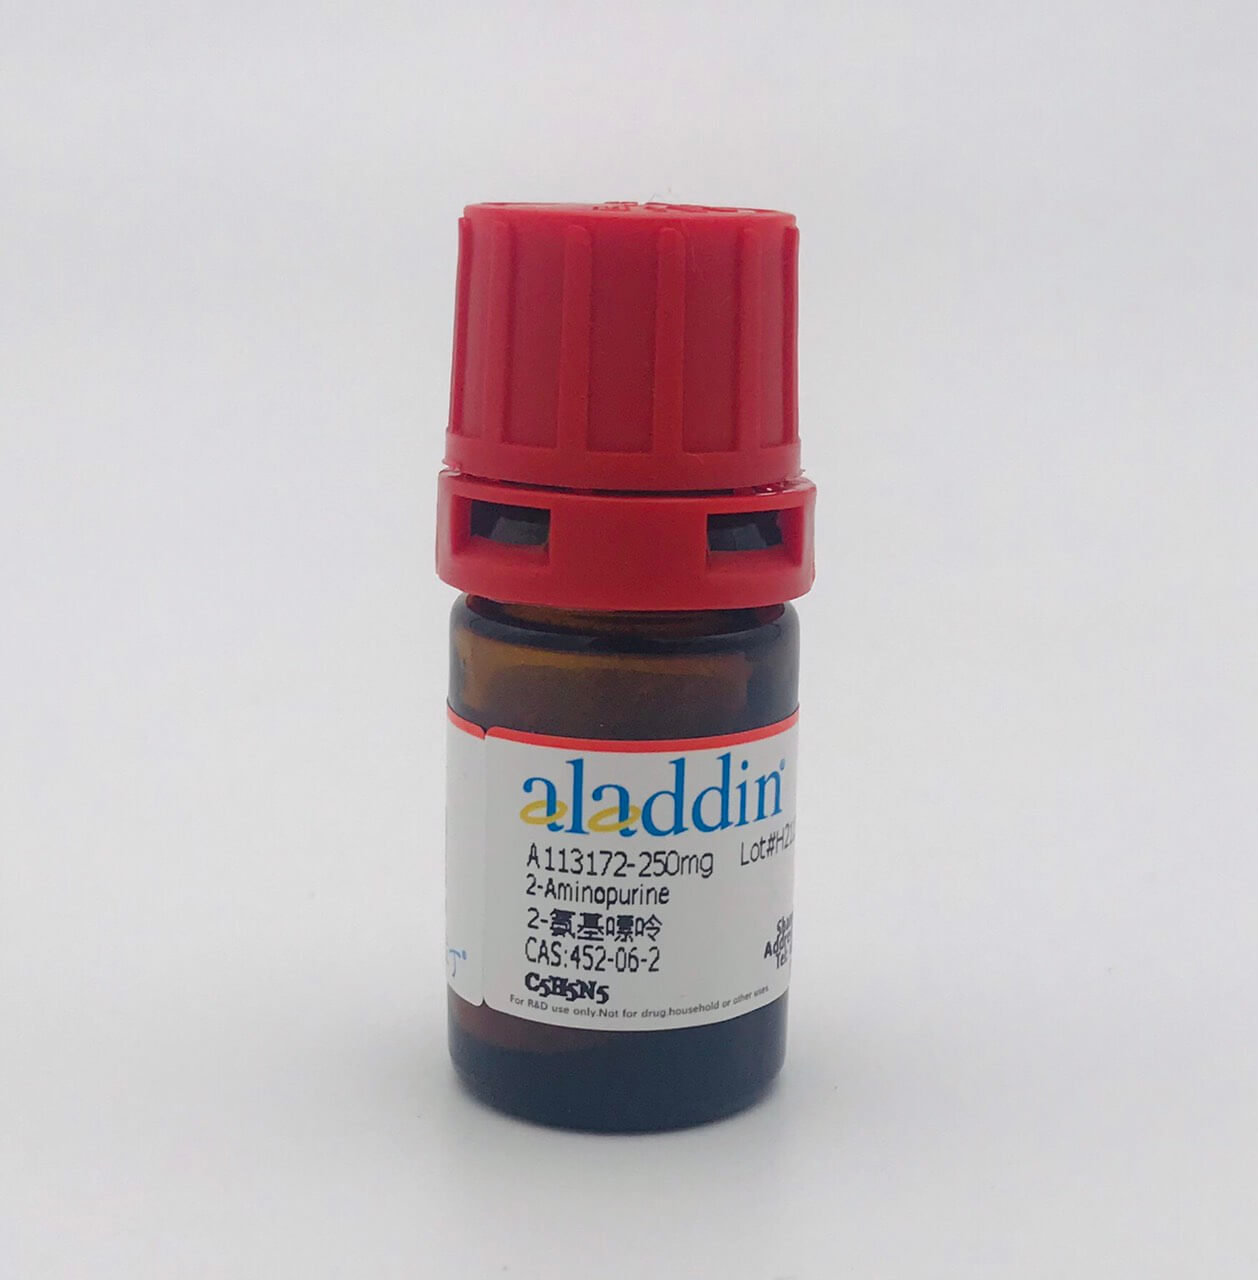 2 aminopurine Aladdin Trung quốc